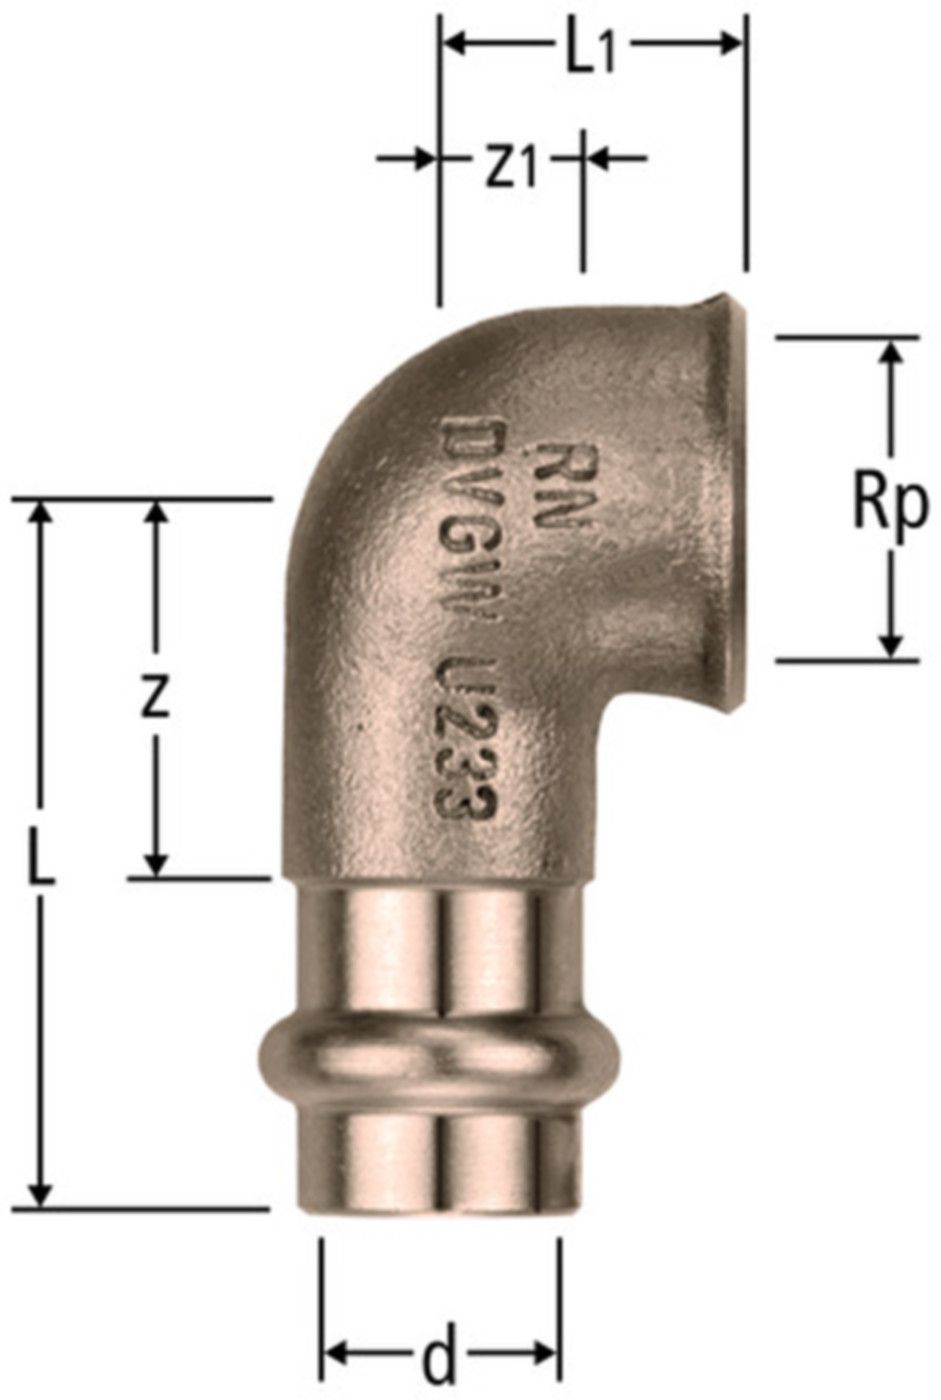 Winkel mit IG 28 x 1/2" 81006.25 - Nussbaum-Optipress-Rotguss-Fittings